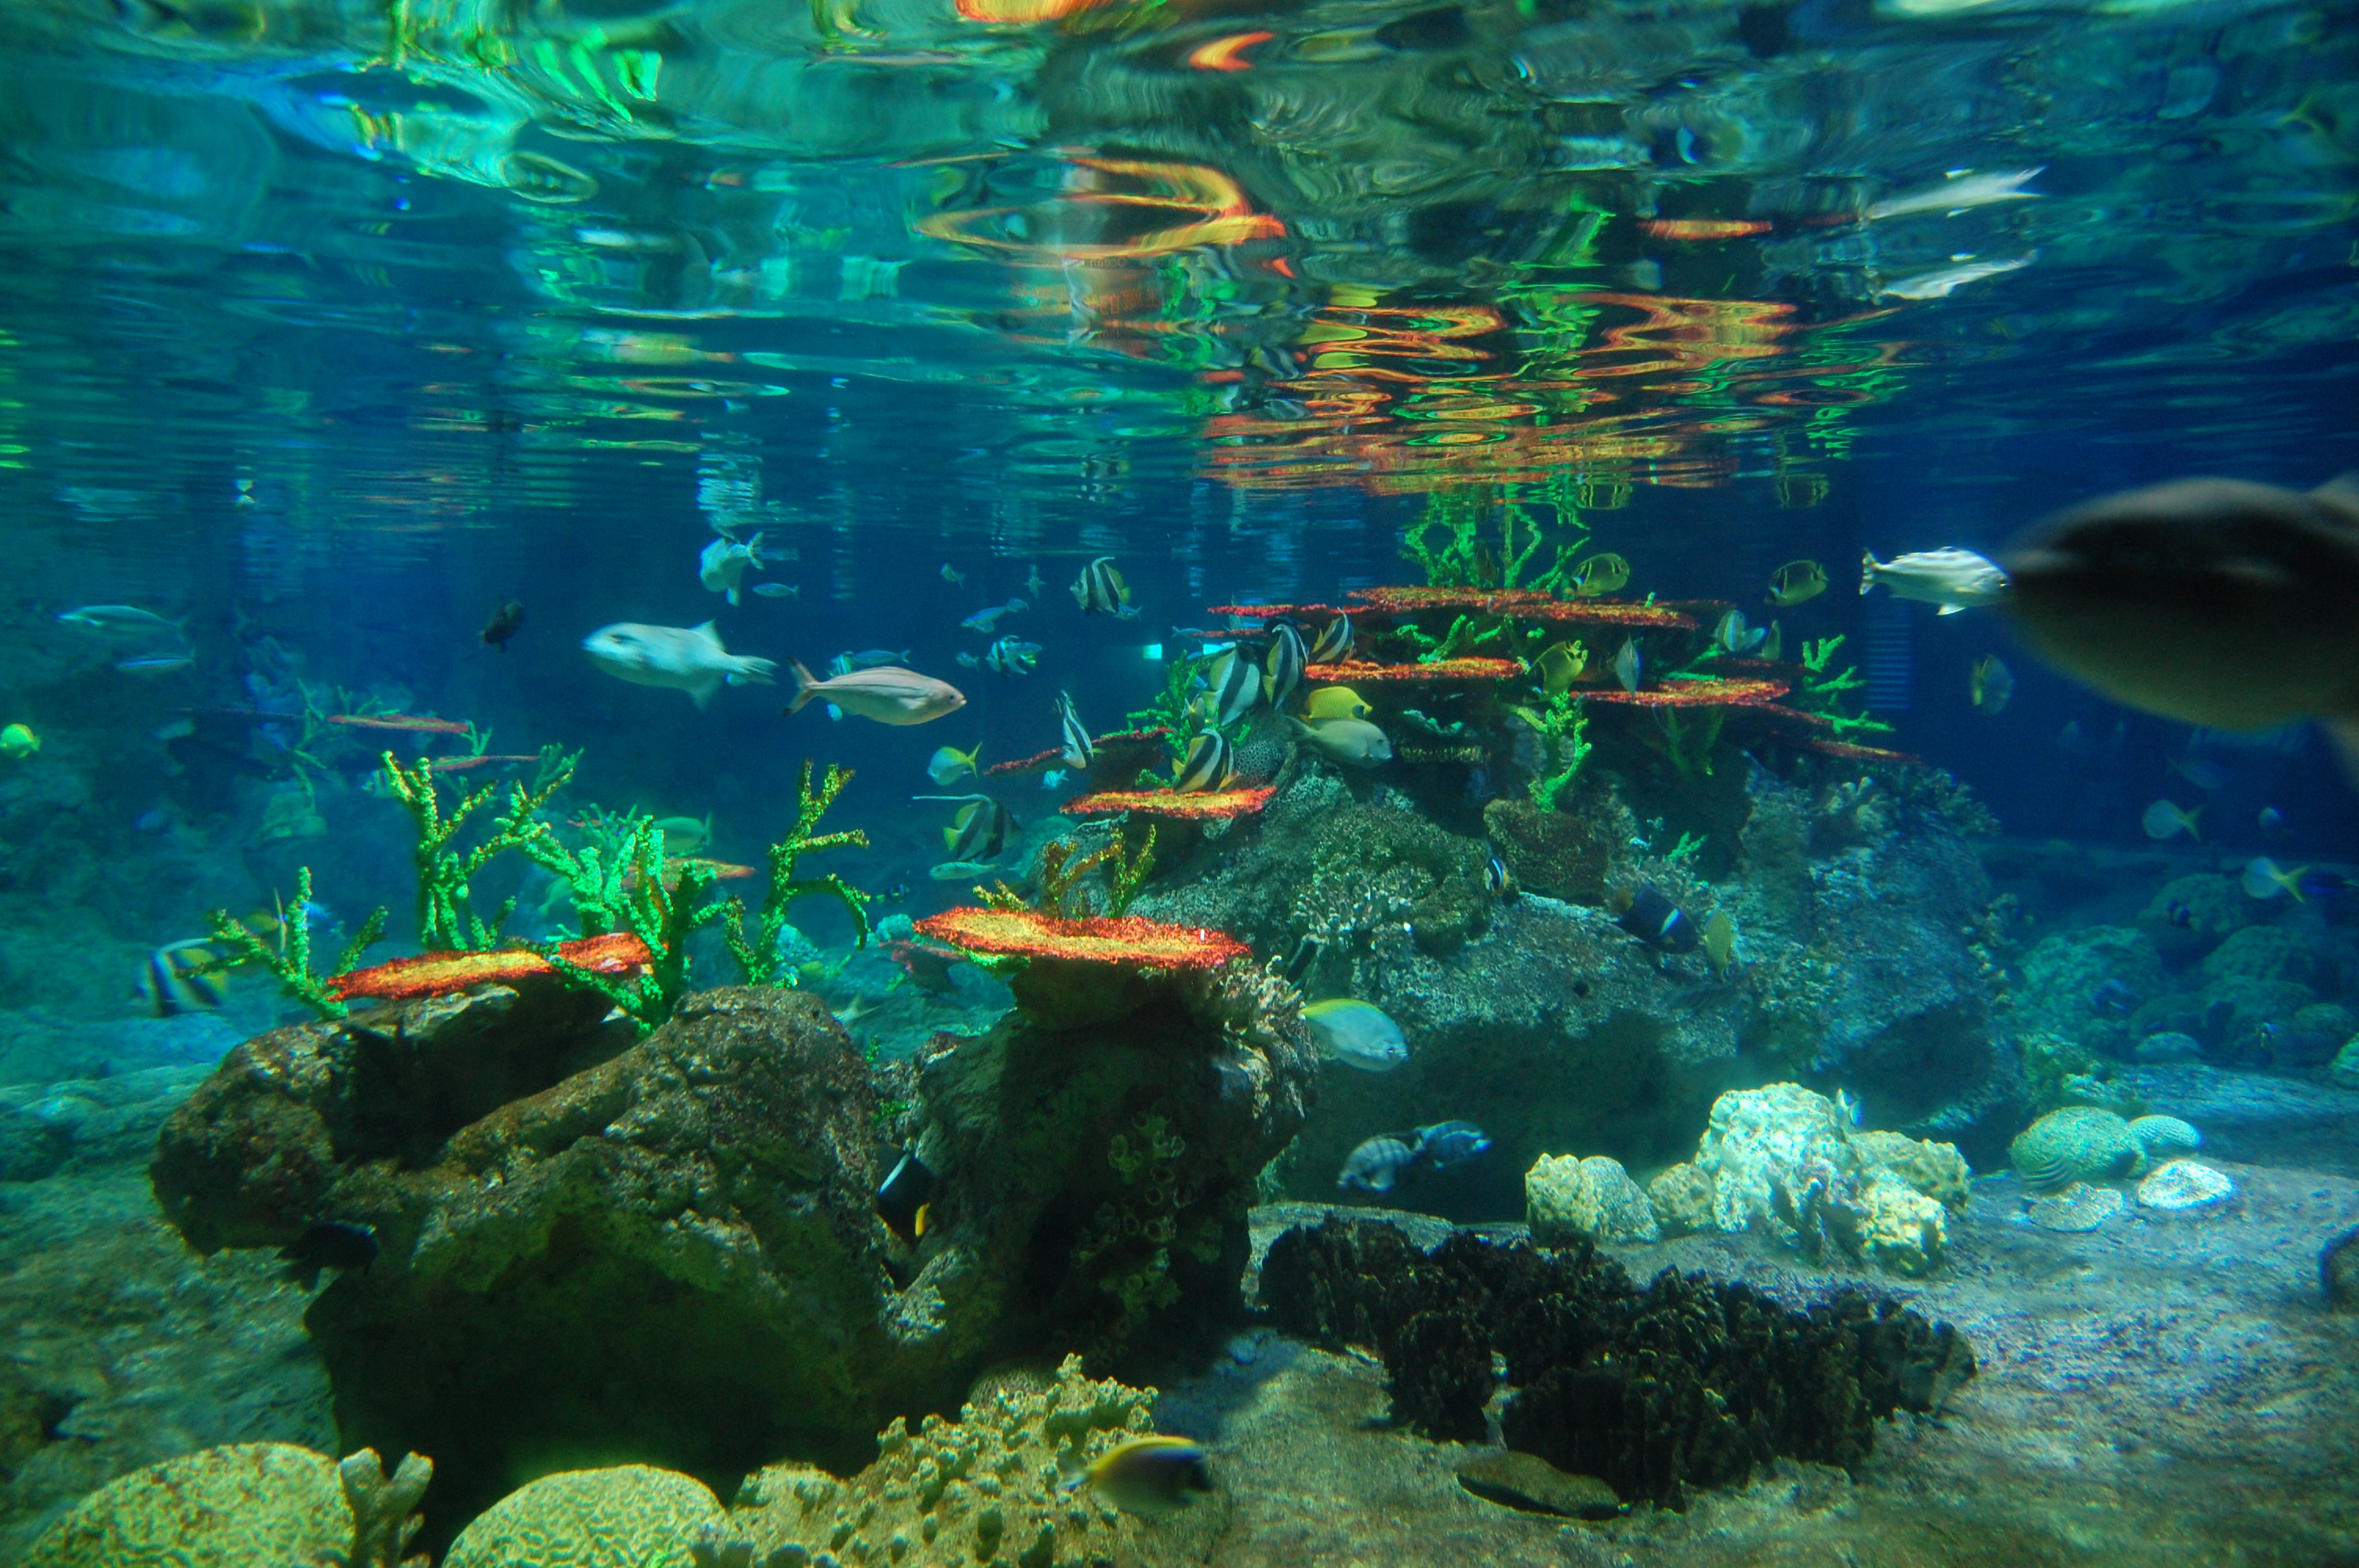 Aquarium In Hk Ocean Park - Live Photos Of The Ocean - HD Wallpaper 